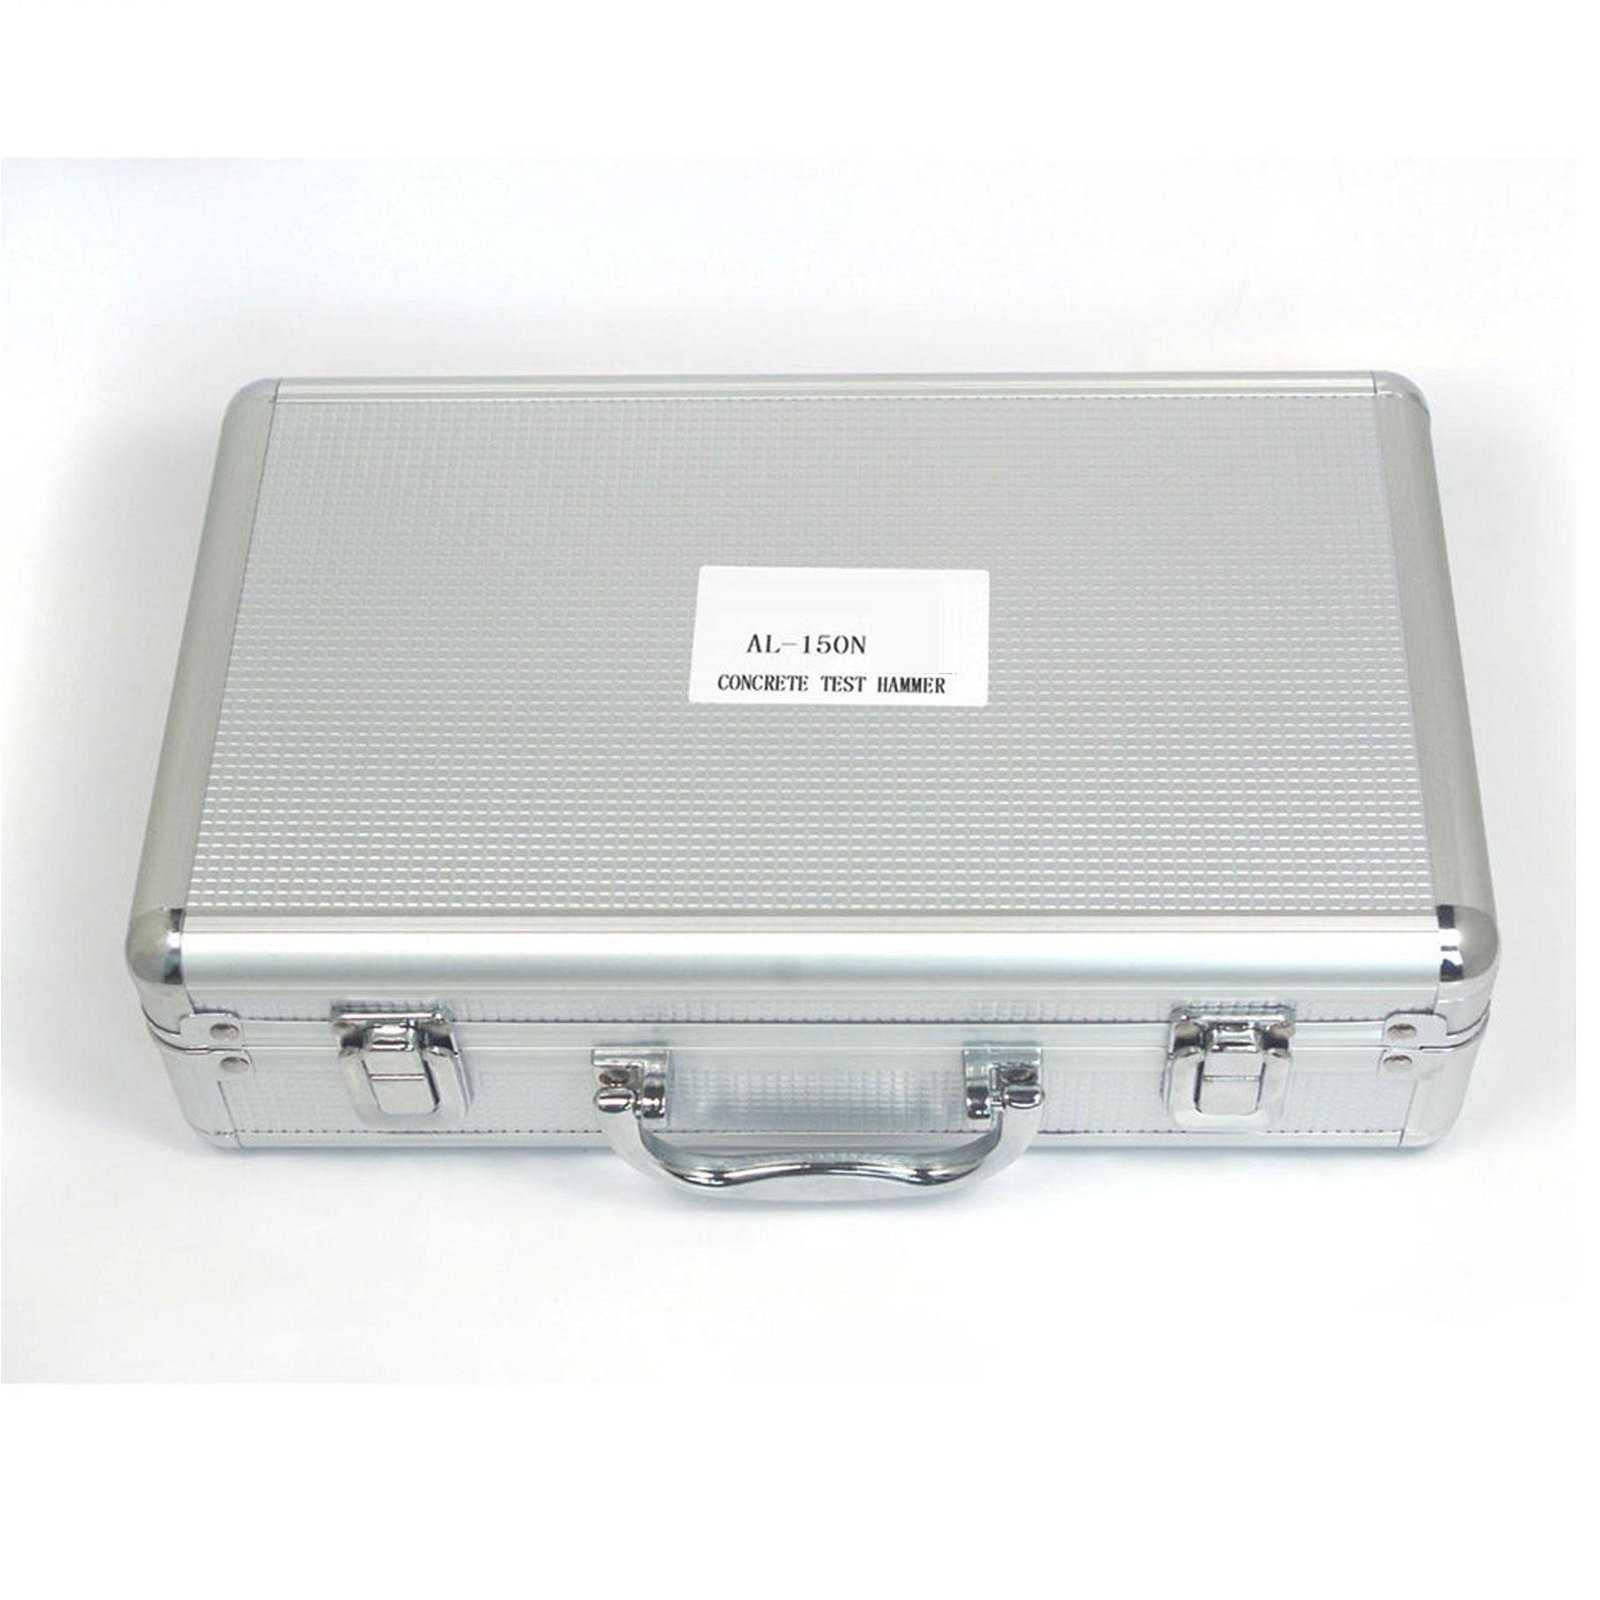 AL-150N Portable Cement Hardness Tester measurement range 20-60 MPa Durometer 4